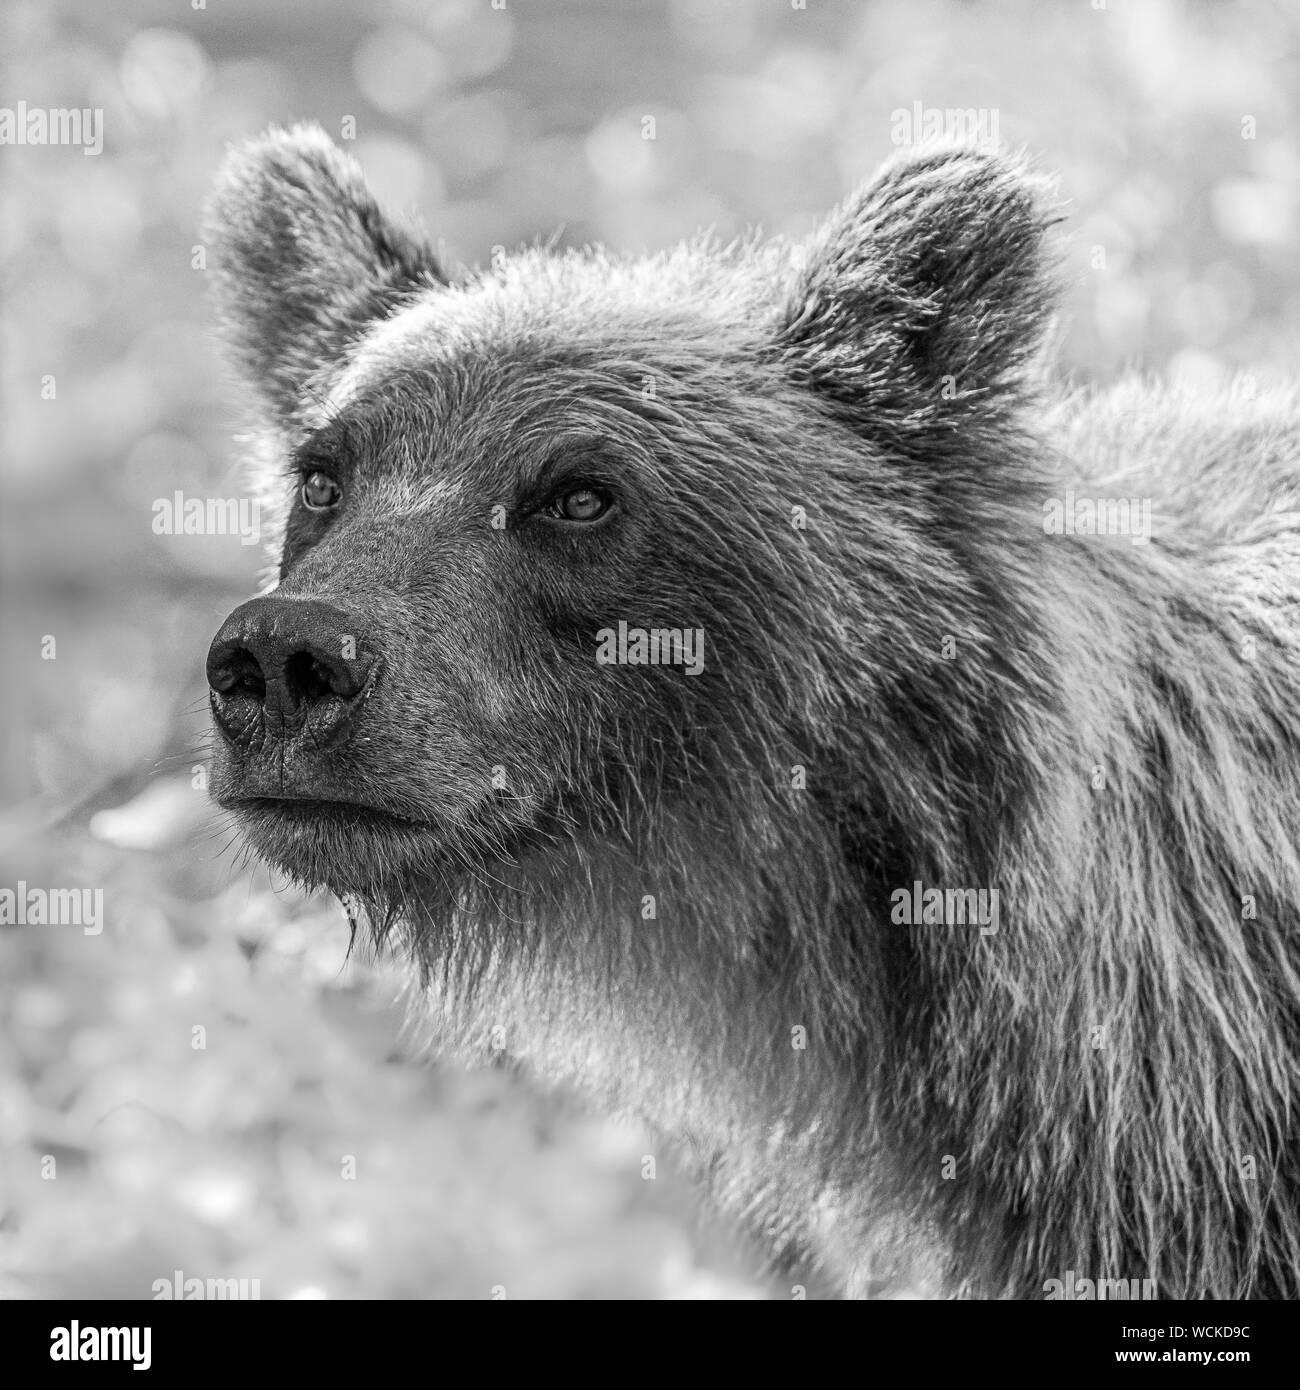 Grizzly Bear close-up of head looking towards camera, Ursus arctos horribilis, Brown Bear, North American, Canada, Stock Photo